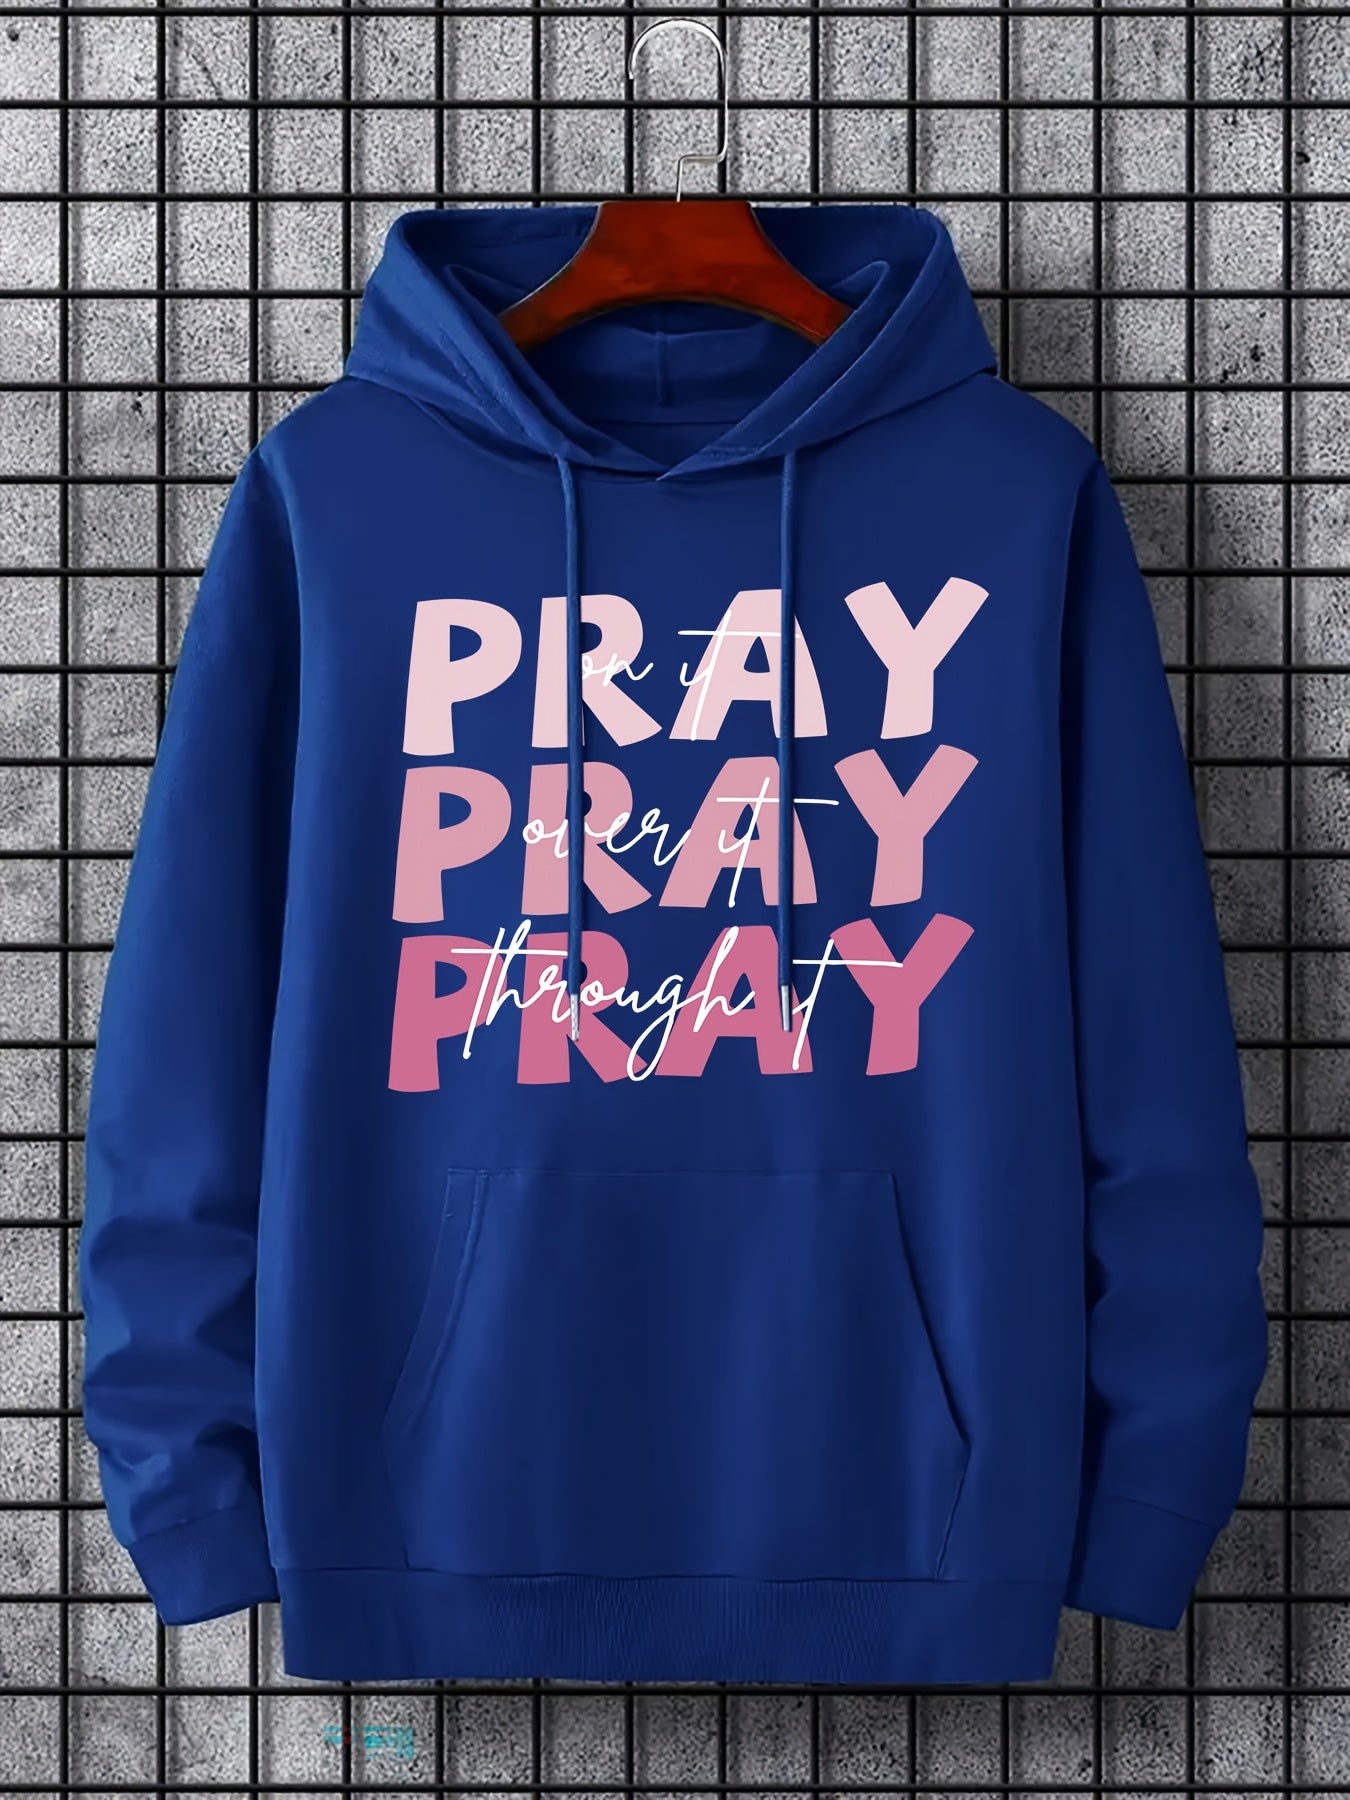 Pray On It Pray Over It Pray Through It Women's Christian Pullover Hooded Sweatshirt claimedbygoddesigns